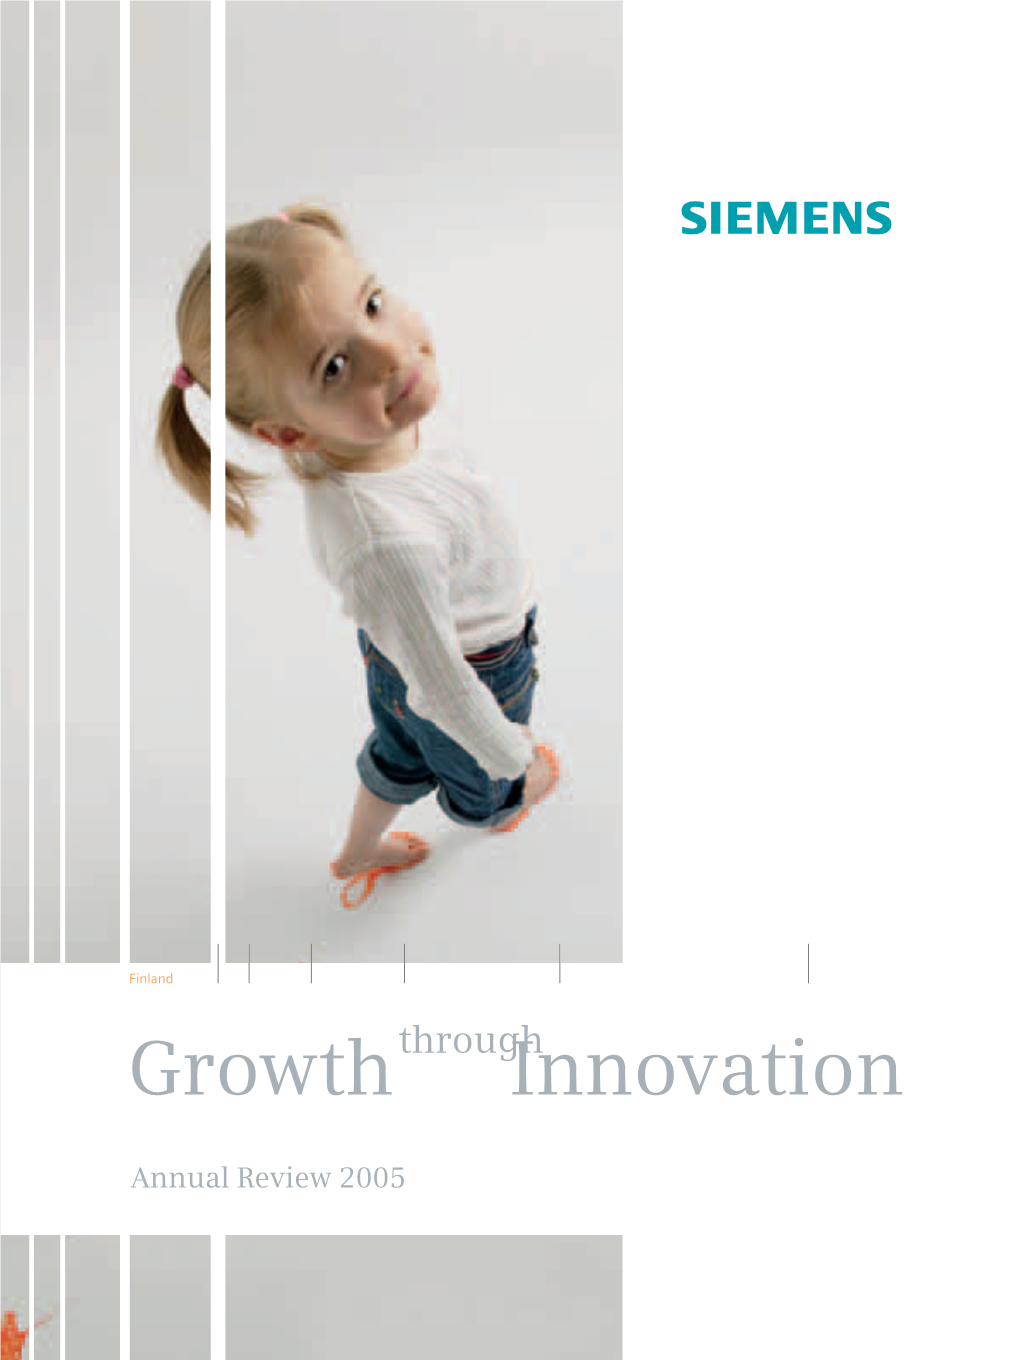 Siemens Annual Report 2005